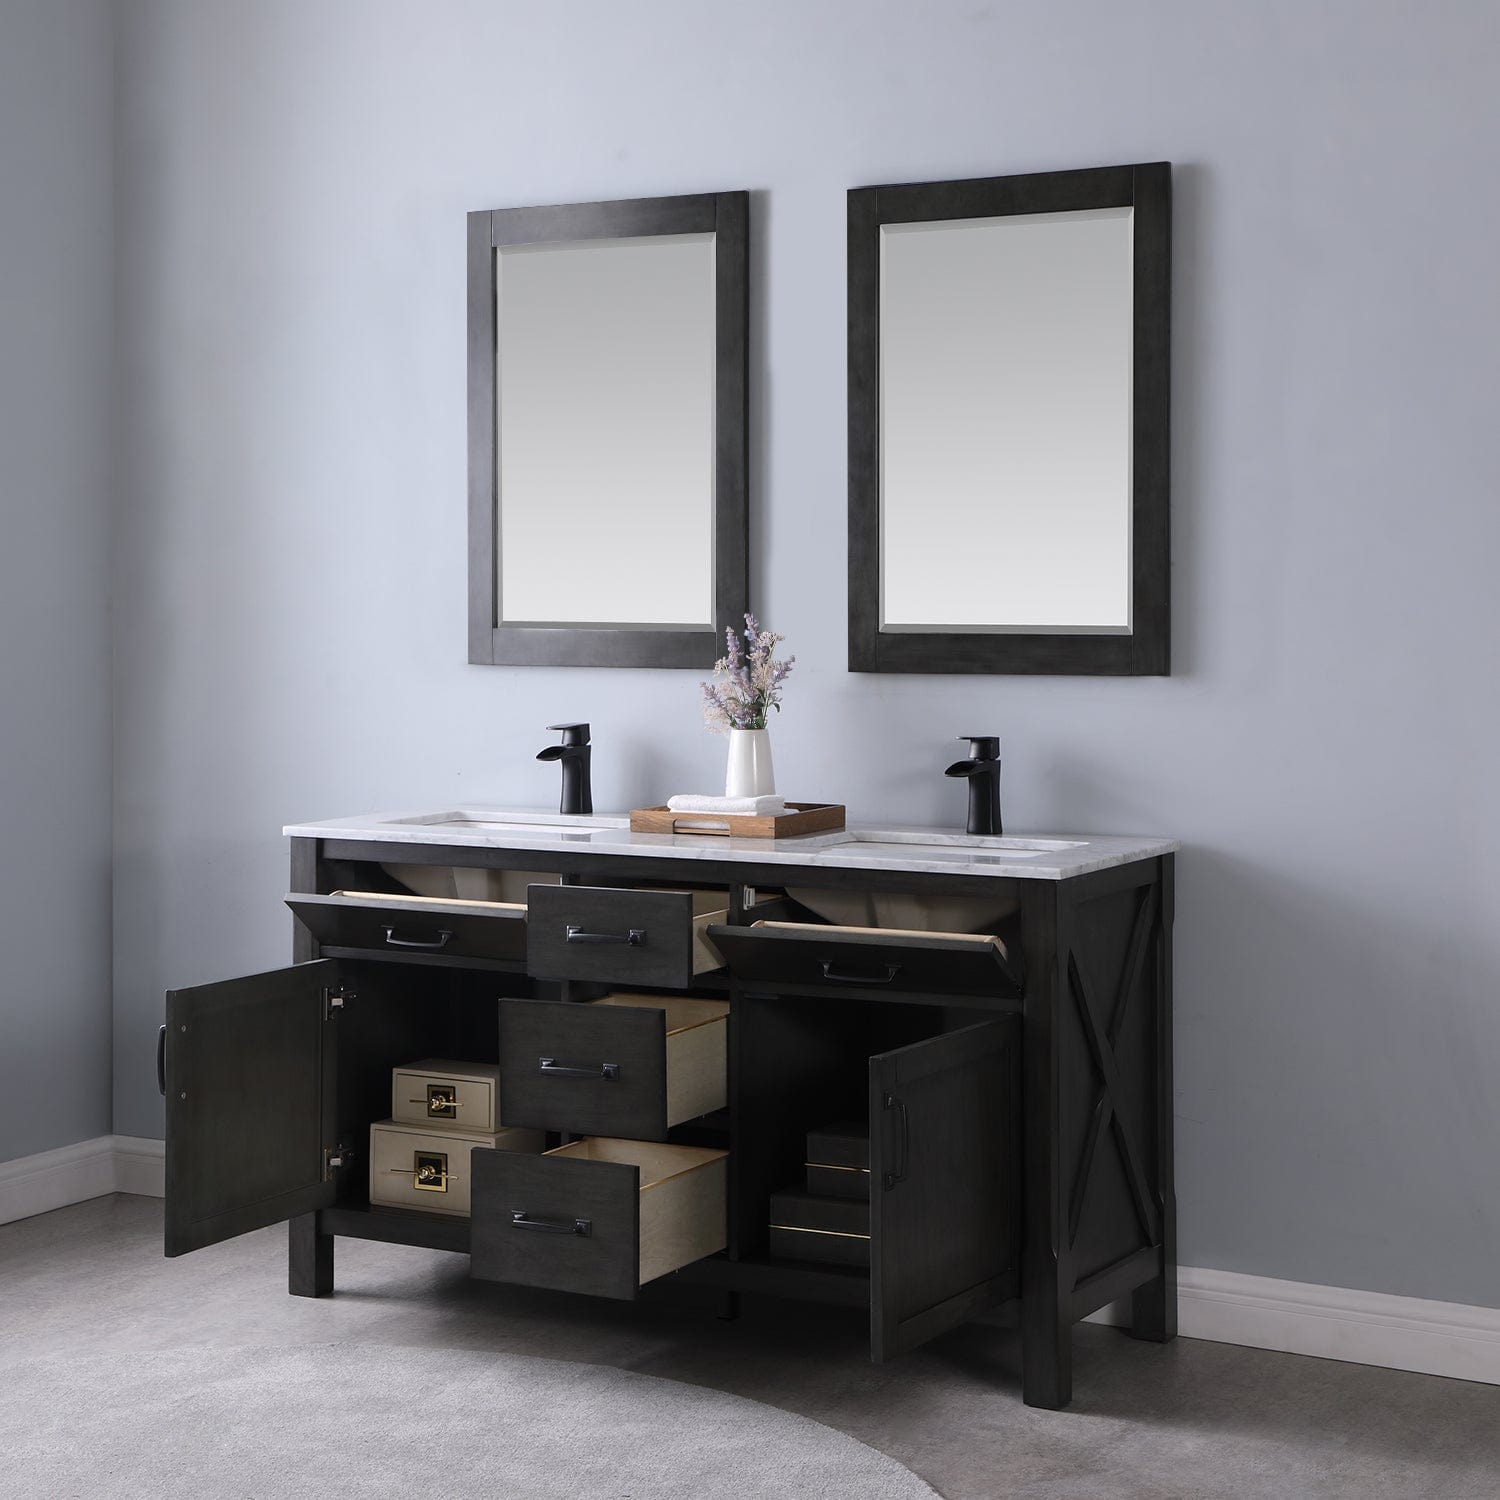 Altair Maribella 60" Double Bathroom Vanity Set in Rust Black and Carrara White Marble Countertop with Mirror 535060-RL-CA - Molaix631112970358Vanity535060-RL-CA